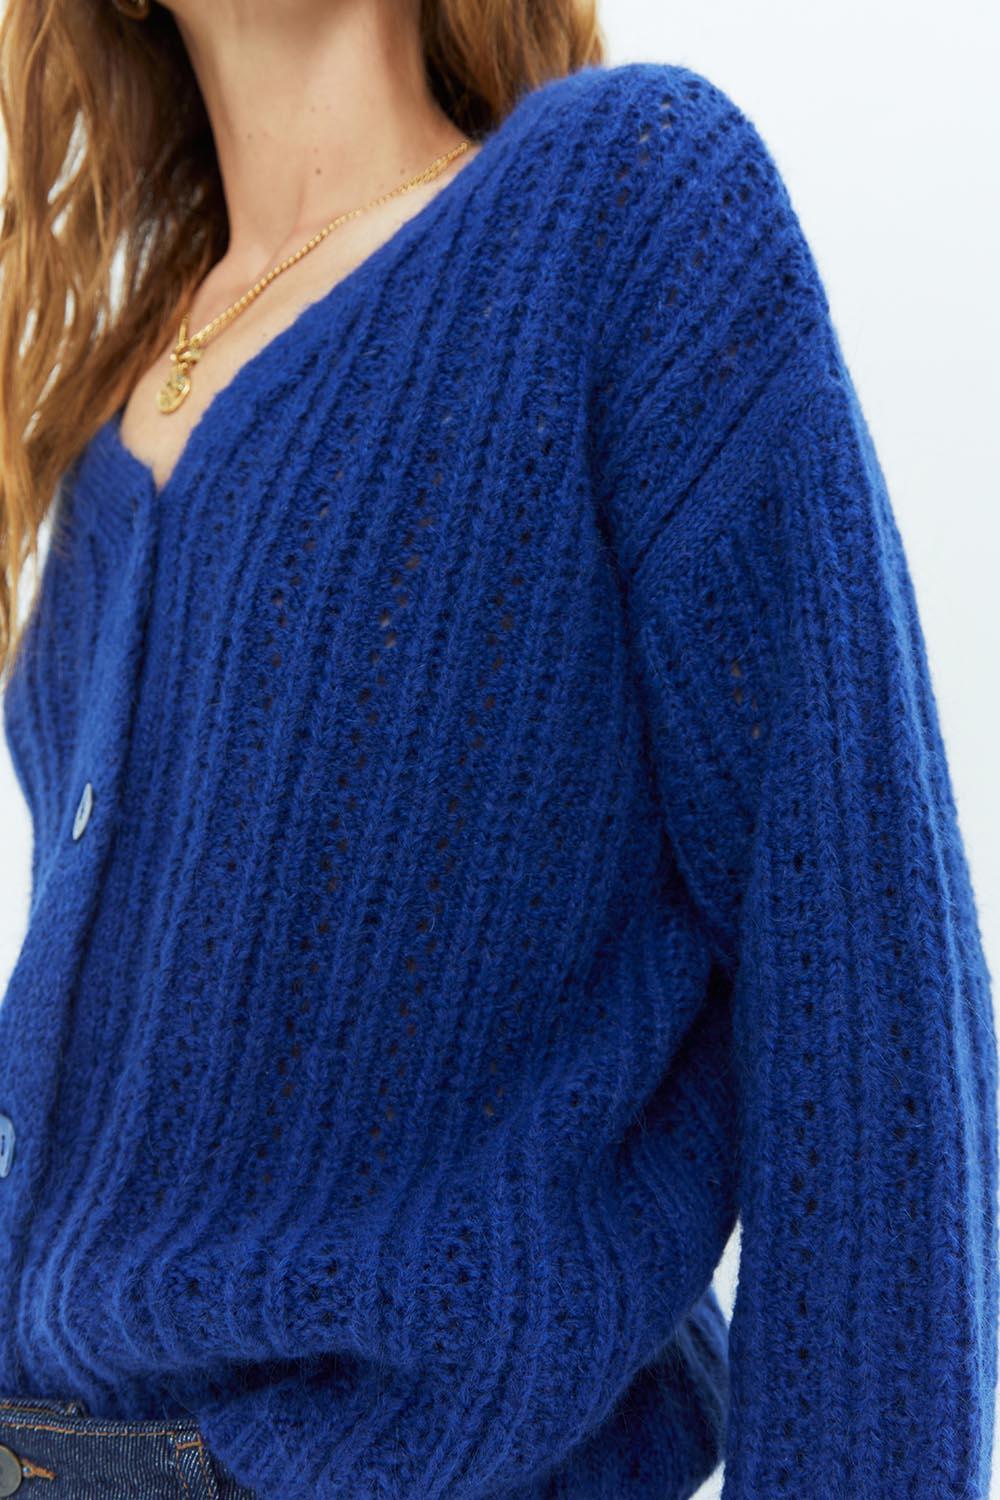 THEORY - Cardigan bleu cobalt en tricot fantaisie